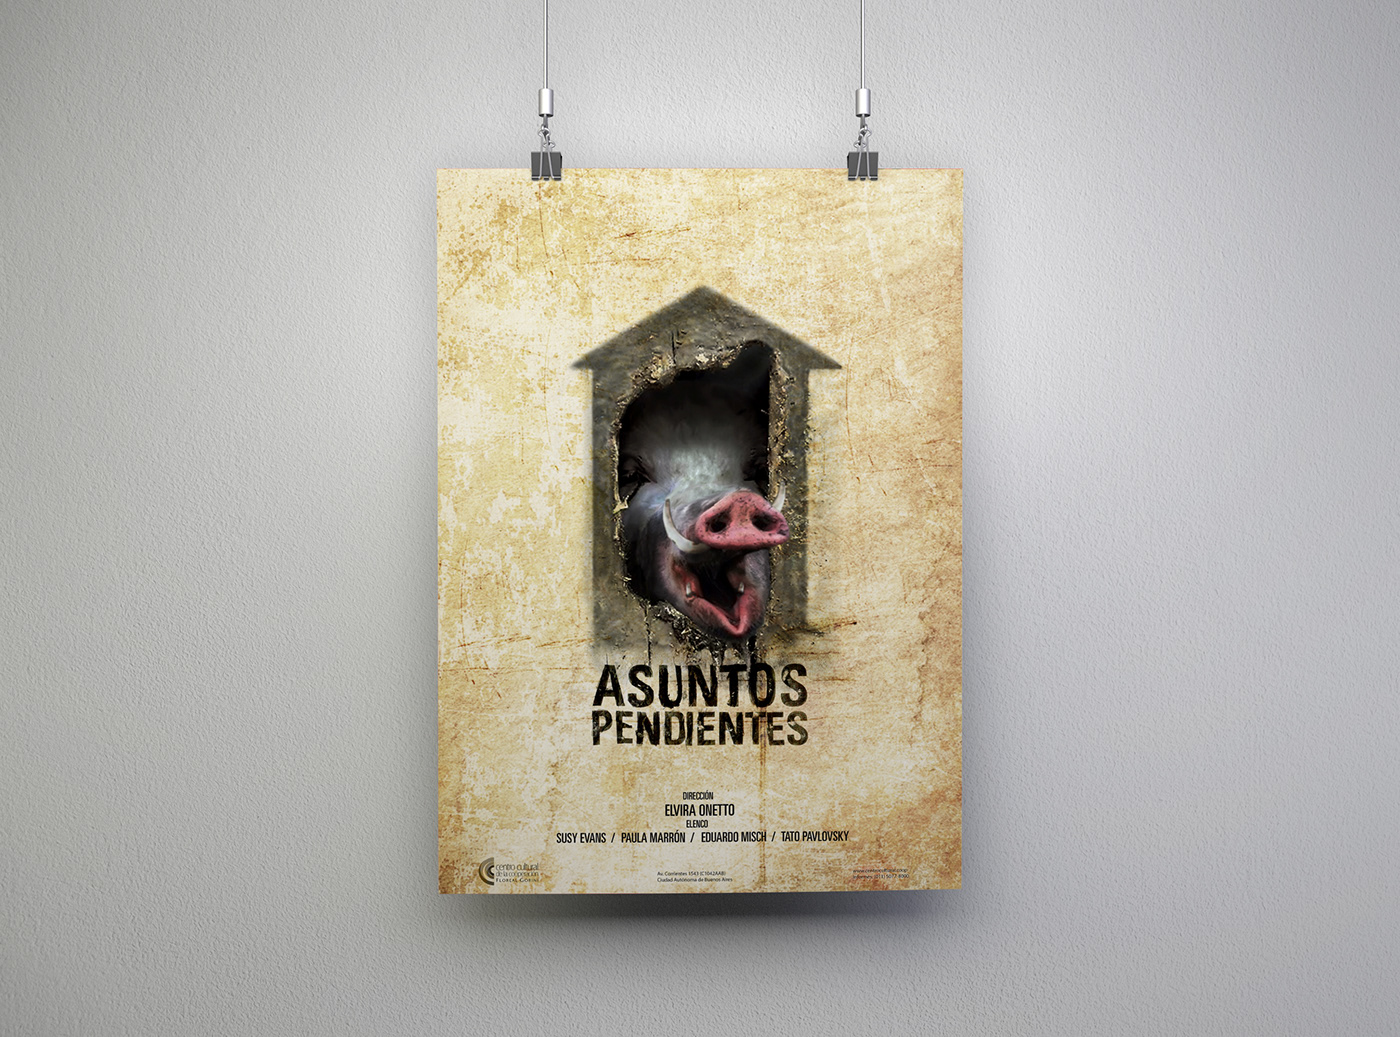 Afiches AFICHESCOLLAGE collageposters collage fadu longinotti pujol diseñografico graphicdesign artesvisuales